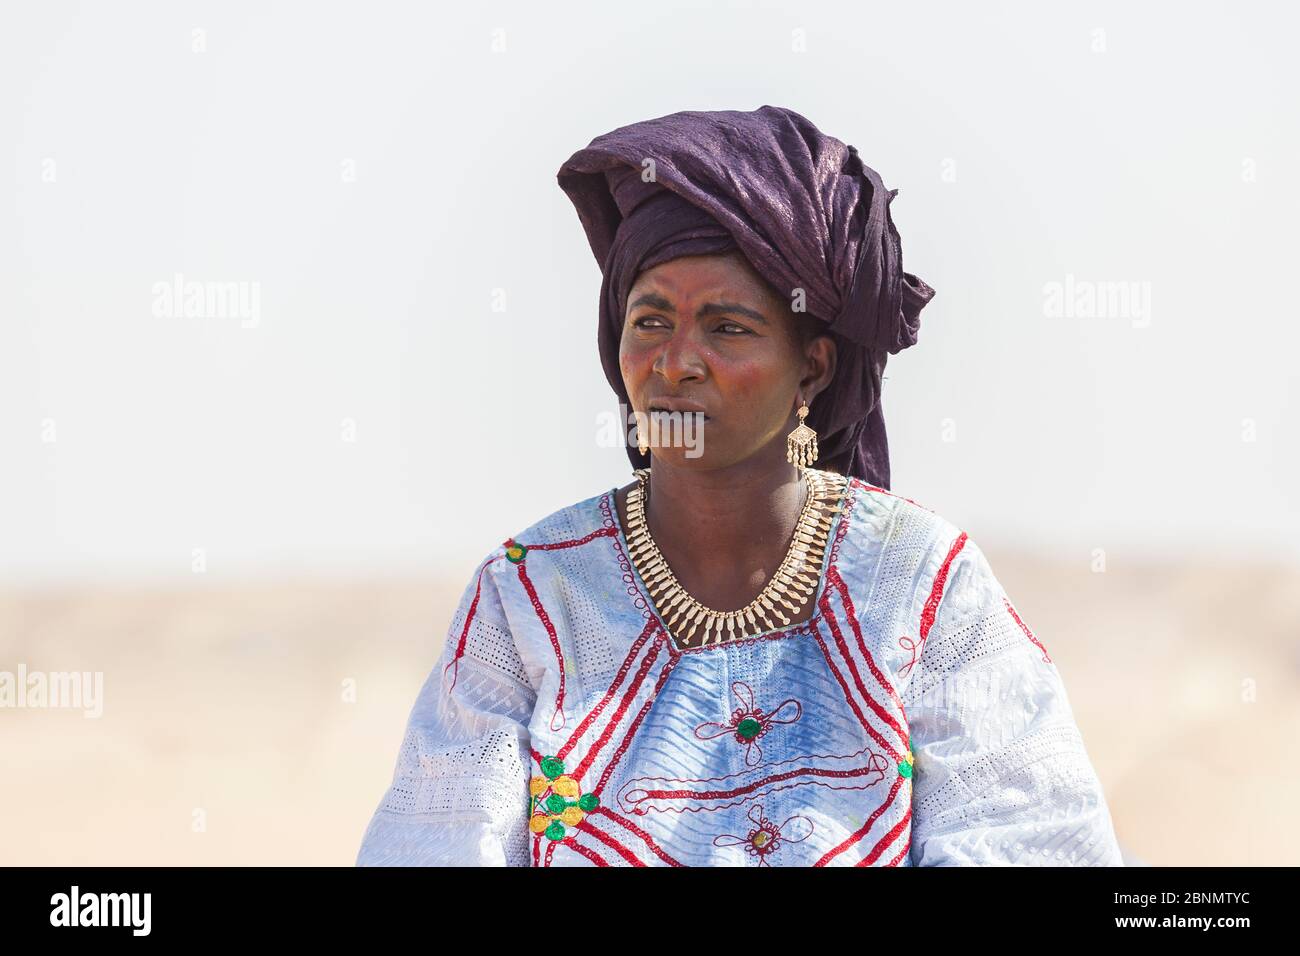 nomad woman in traditional turban Sahara desert Stock Photo